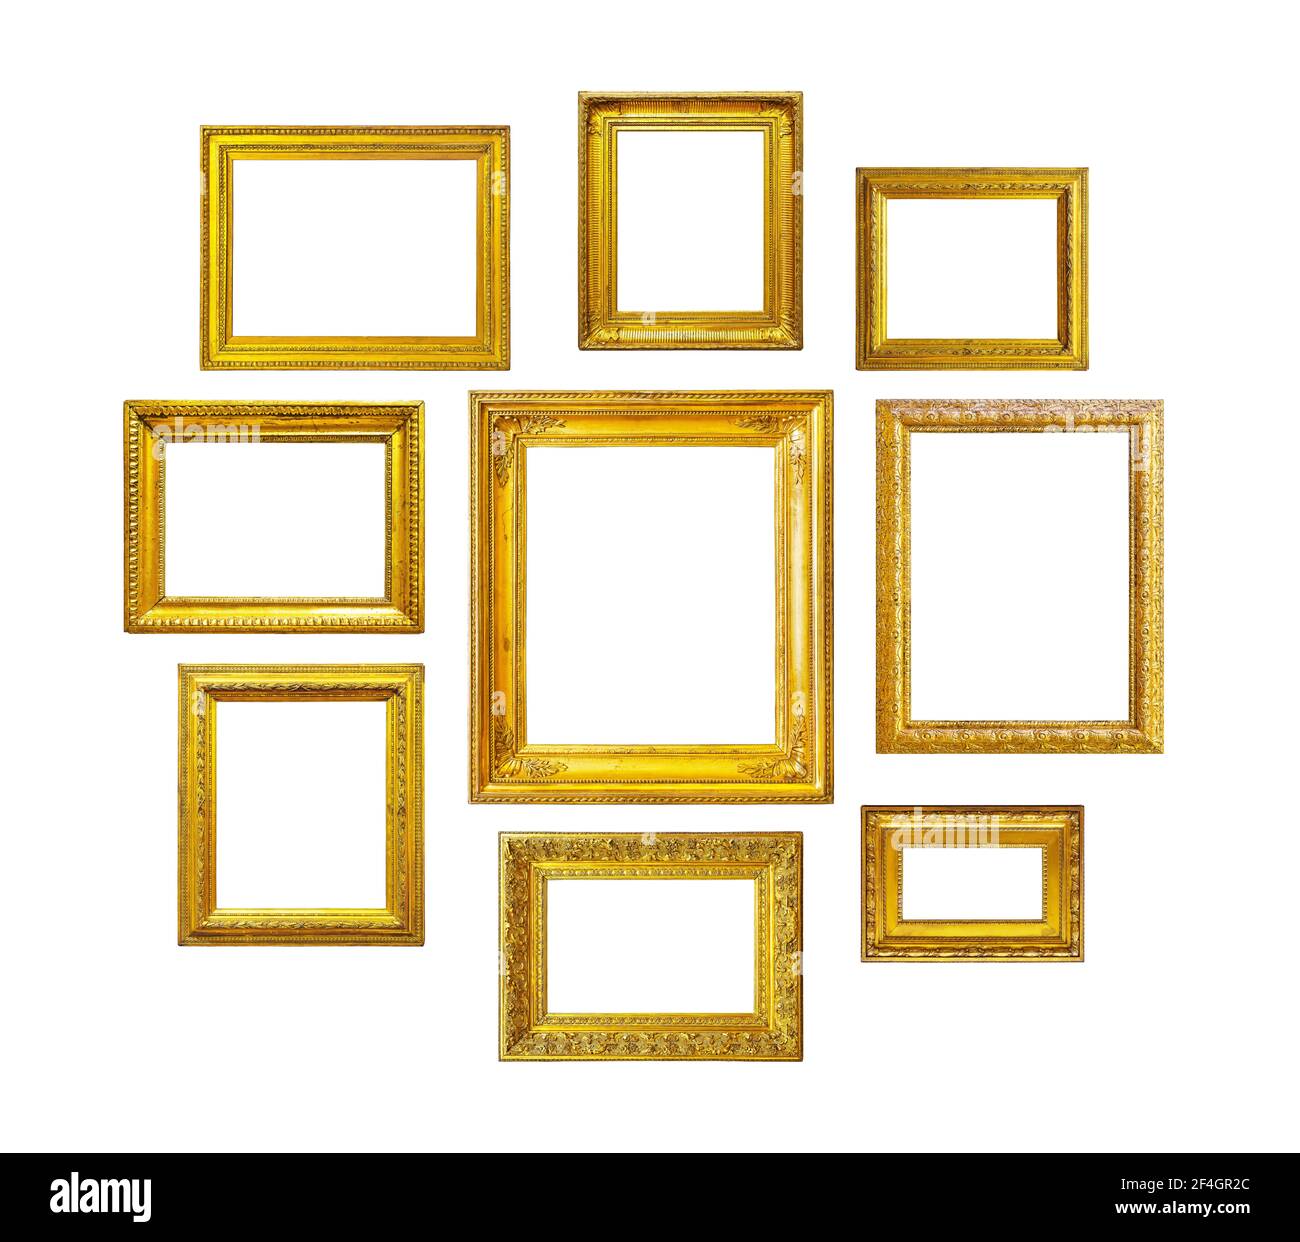 Golden vintage frames on white background. Set of golden frames for paintings, mirrors or photo isolated on white background. Stock Photo